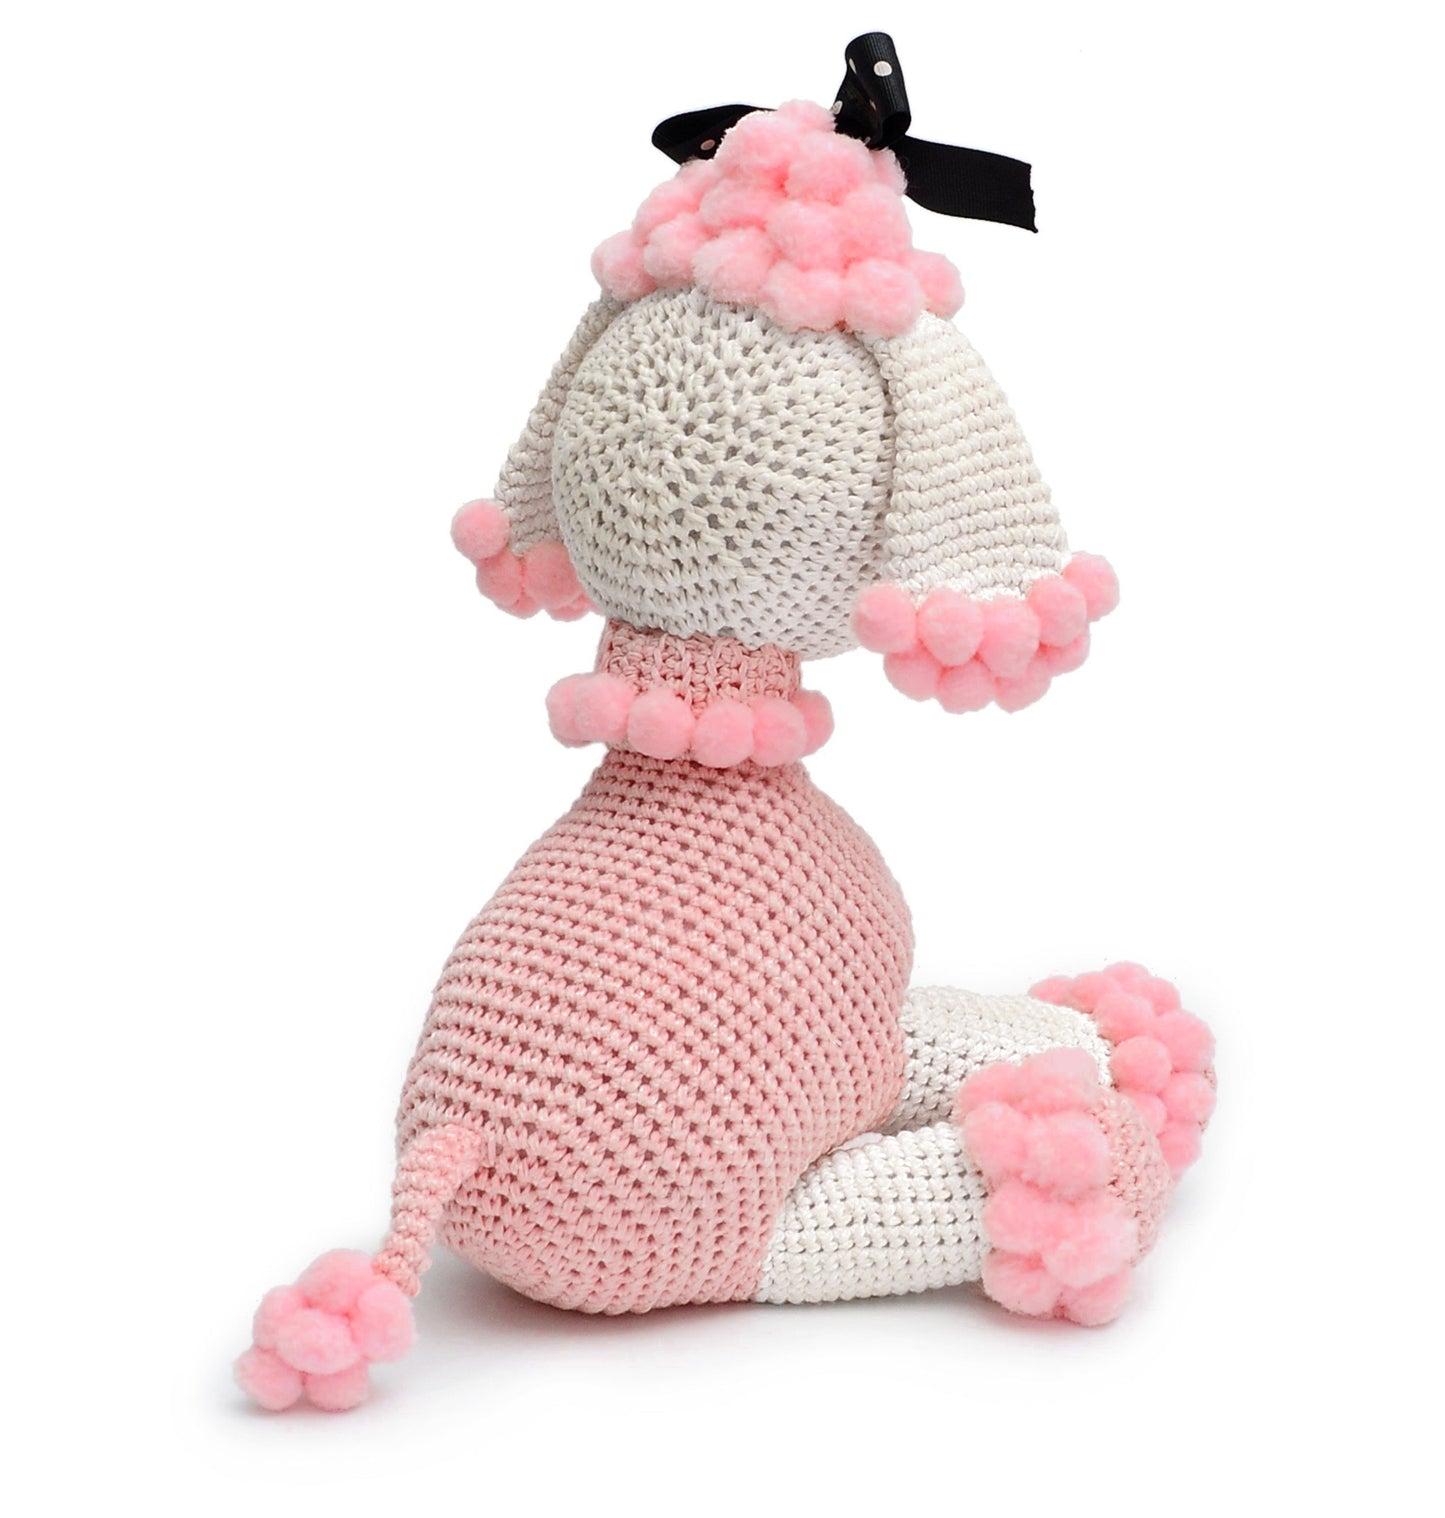 Cute-Pink Poodle Handmade Amigurumi Stuffed Toy Knit Crochet Doll VAC